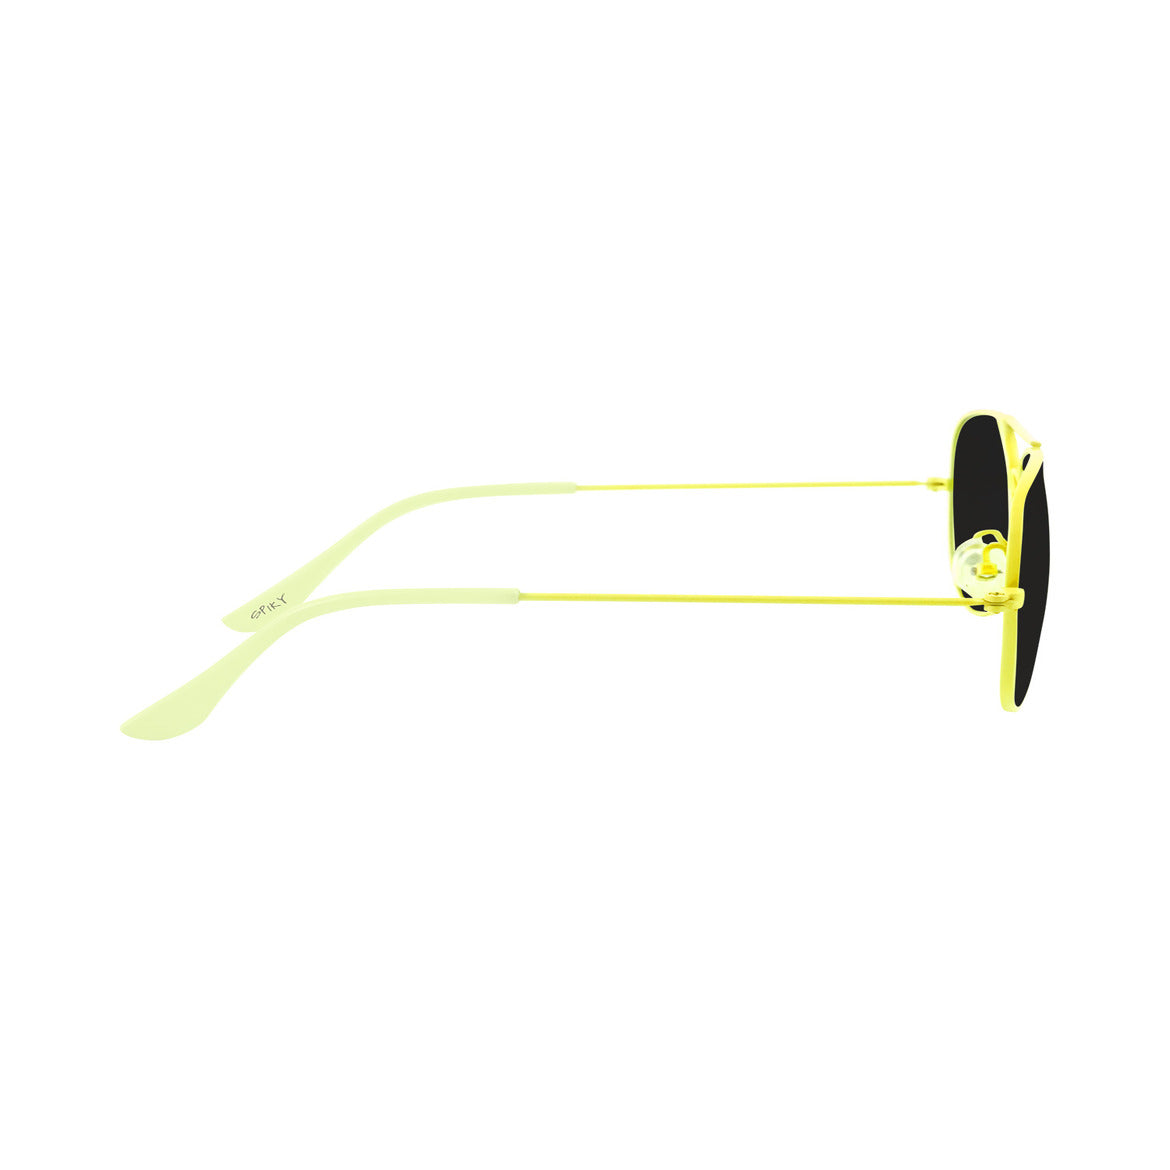 Spiky Aviator UV Protected Sunglass - Yellow Grey